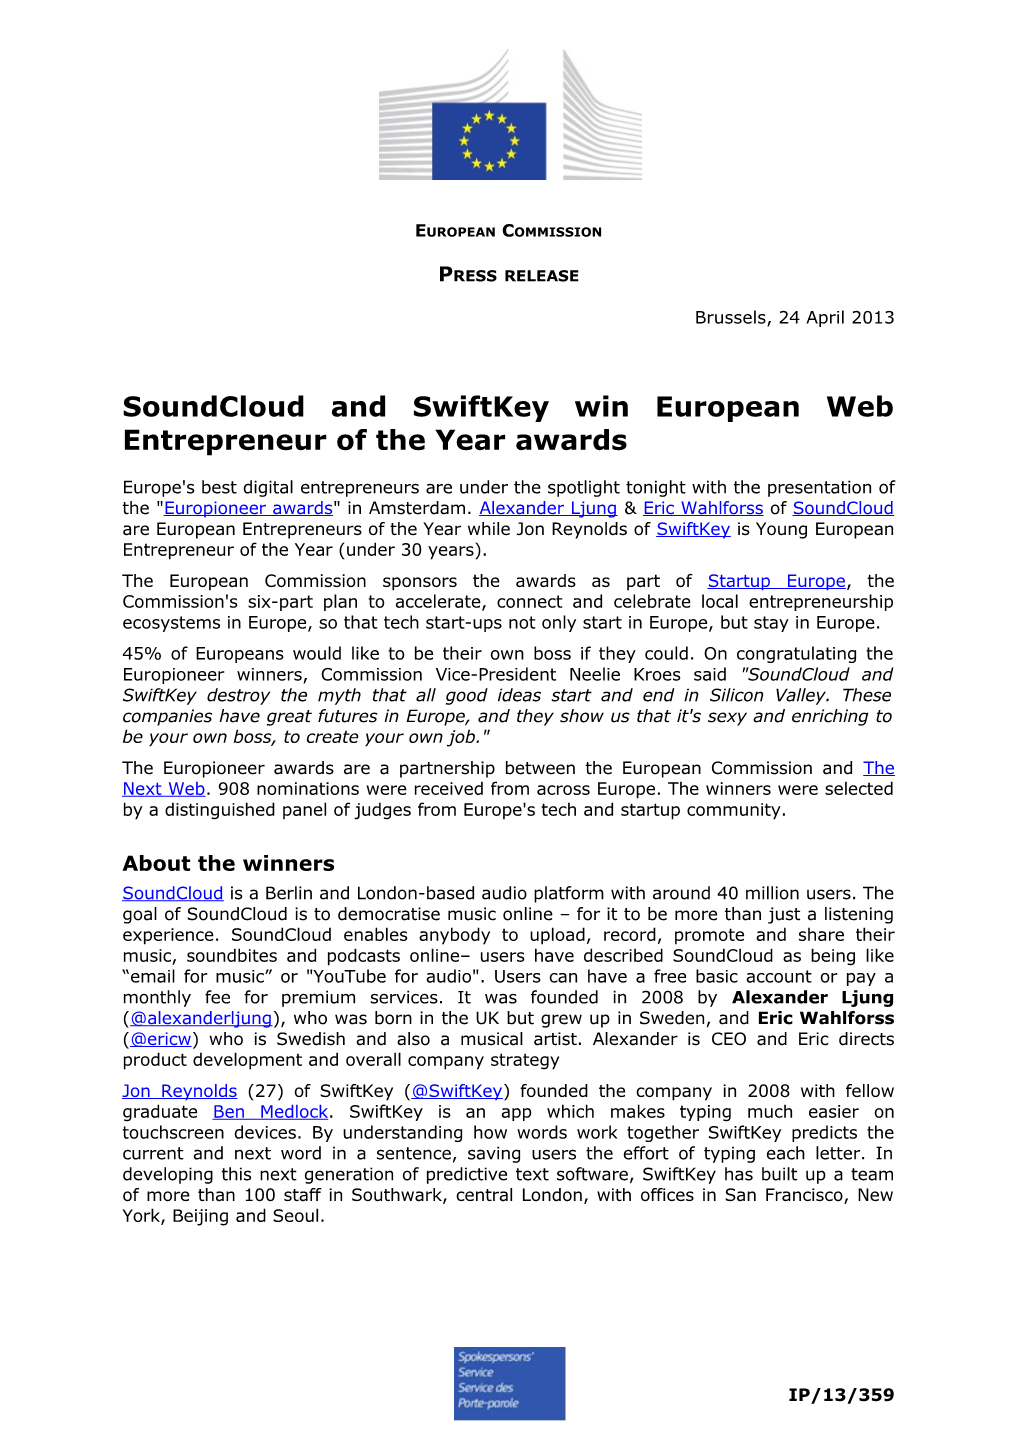 Soundcloud and Swiftkey Win European Web Entrepreneur of the Year Awards